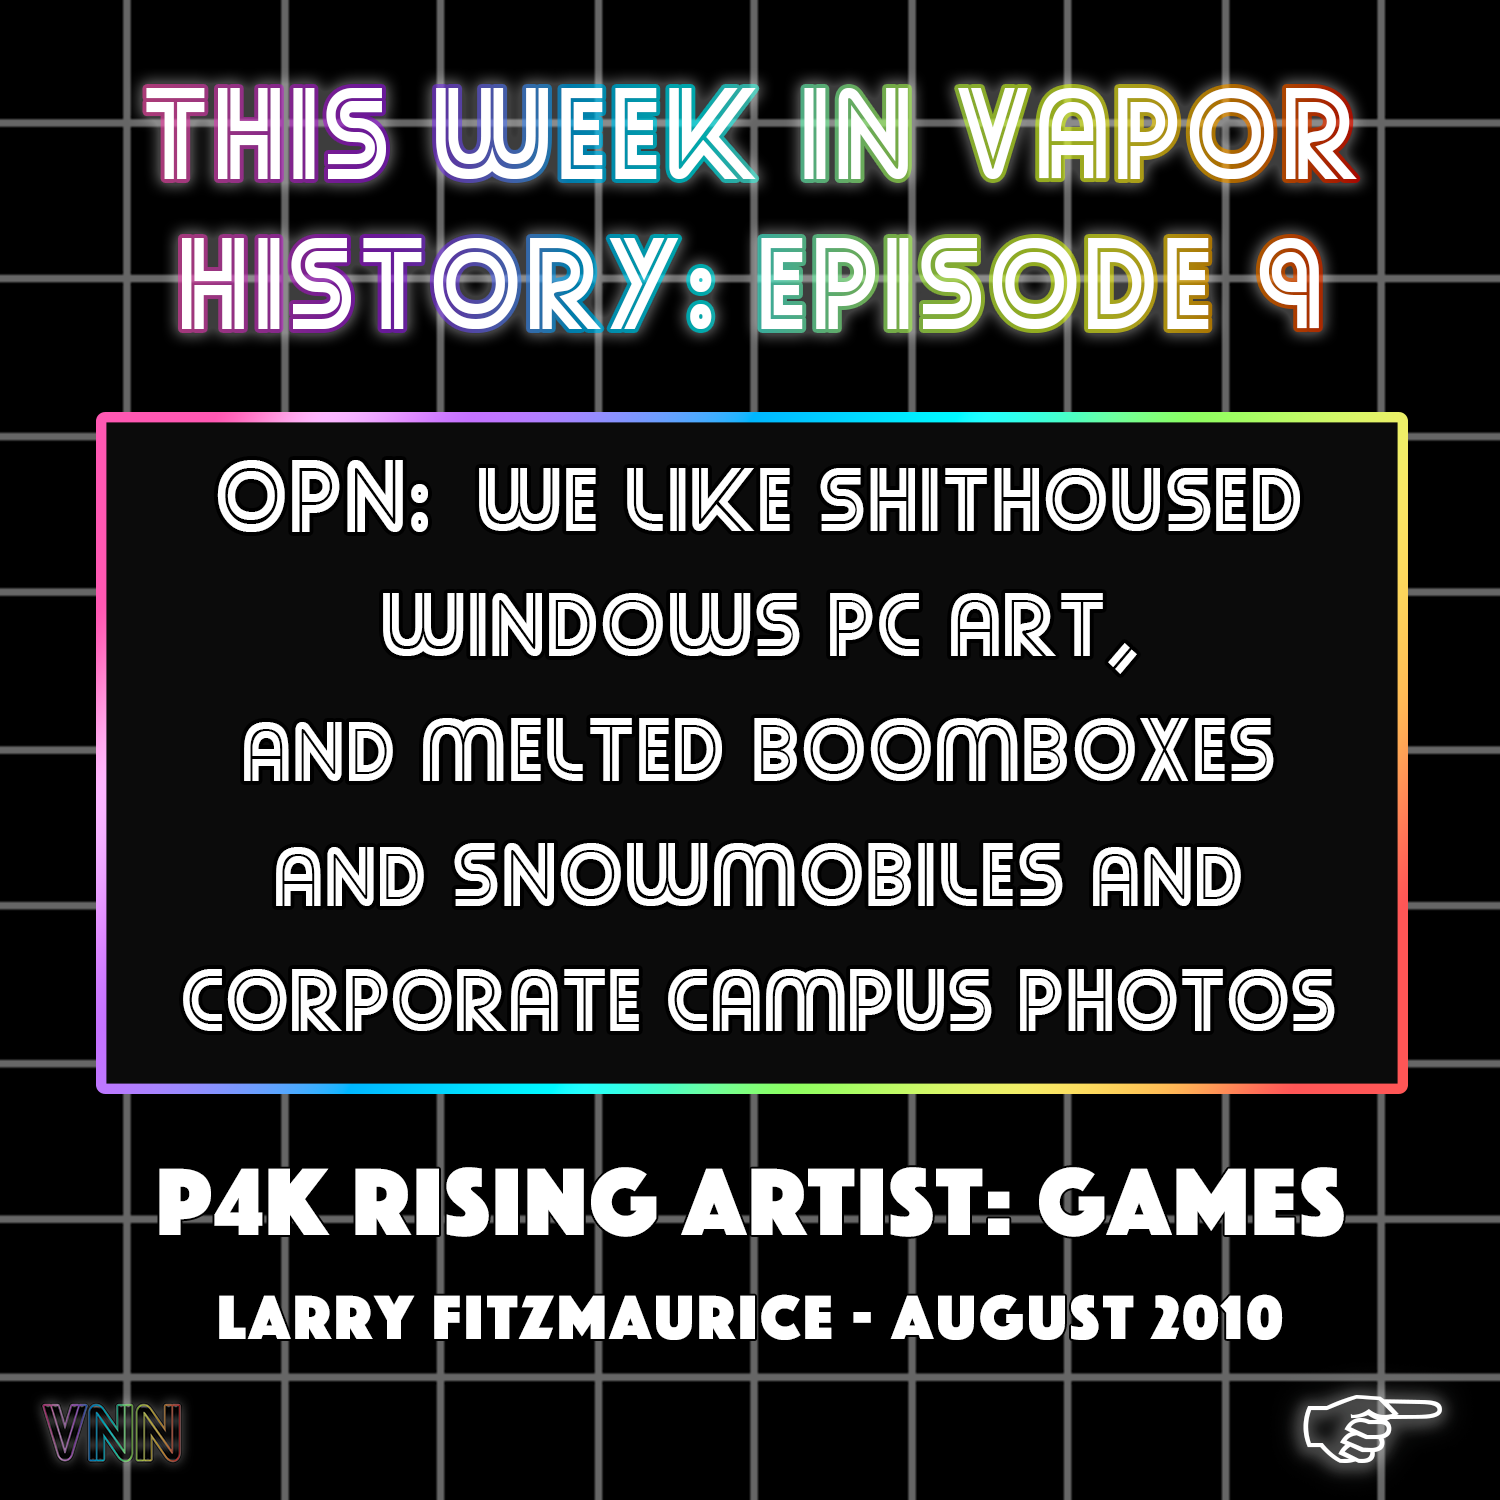 Vapor History: Pitchfork Rising Artist Profile - Games (August 24th, 2010)